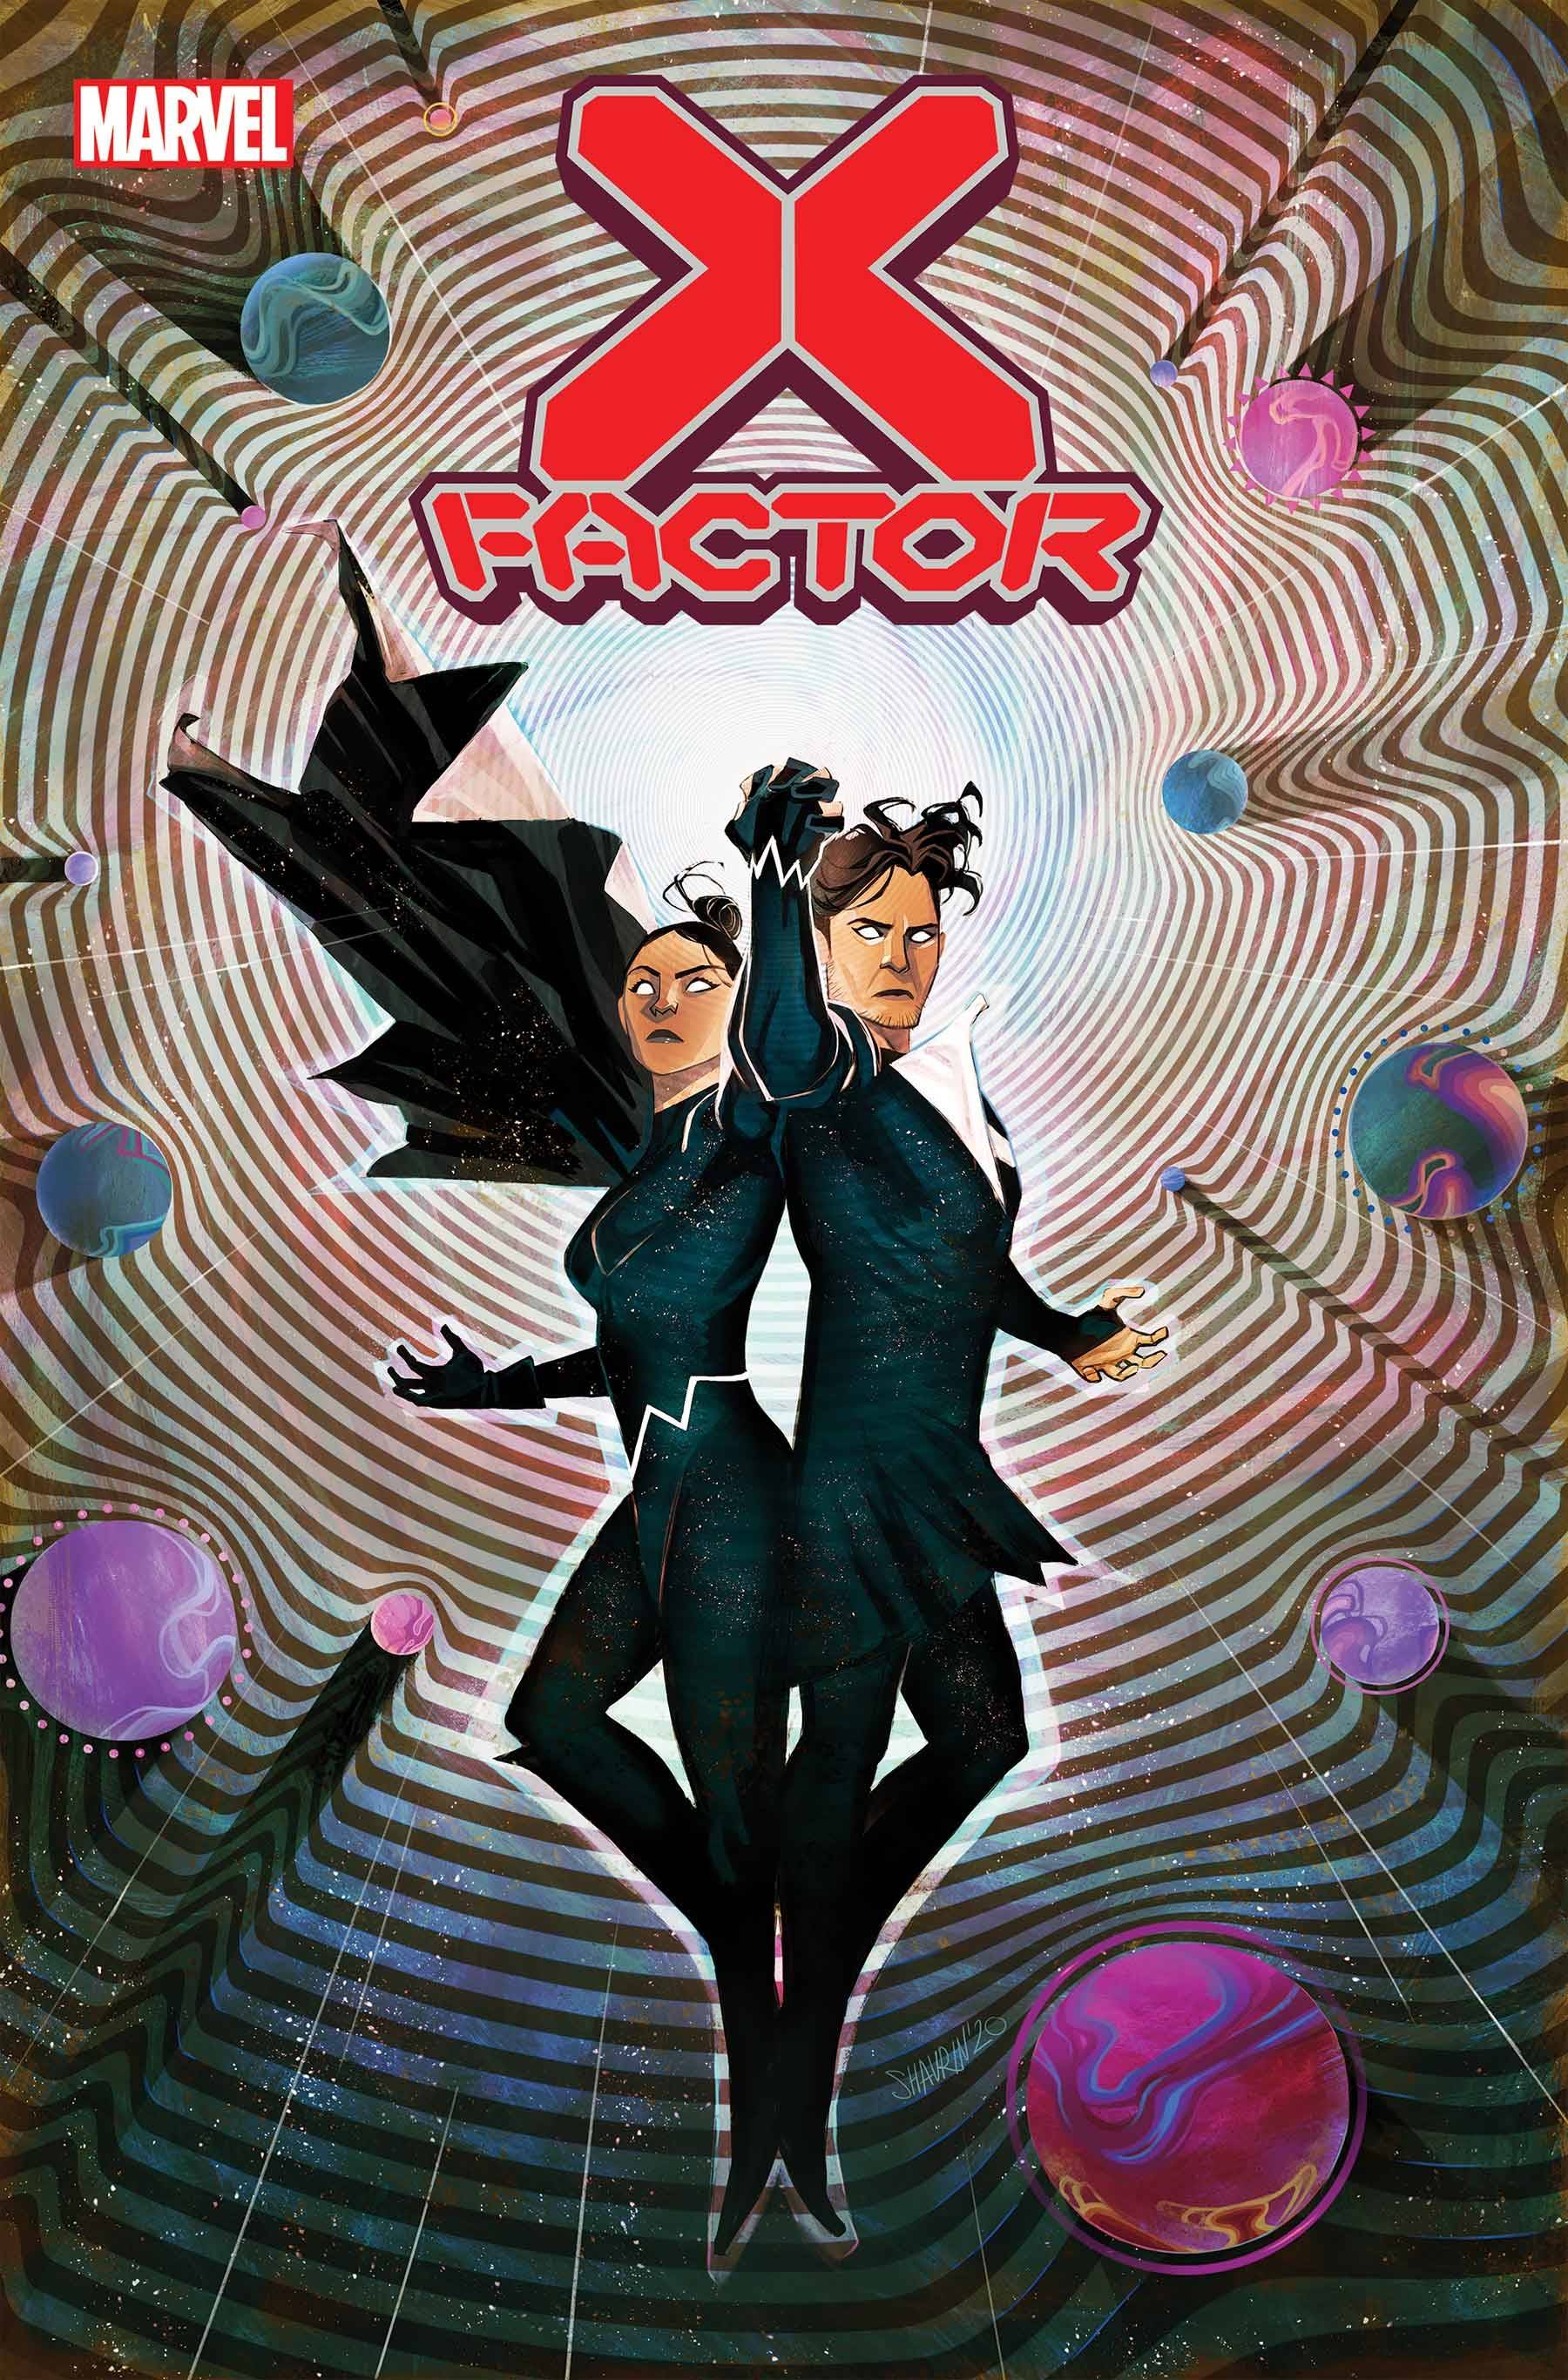 X-FACTOR #5 XOS | Game Master's Emporium (The New GME)